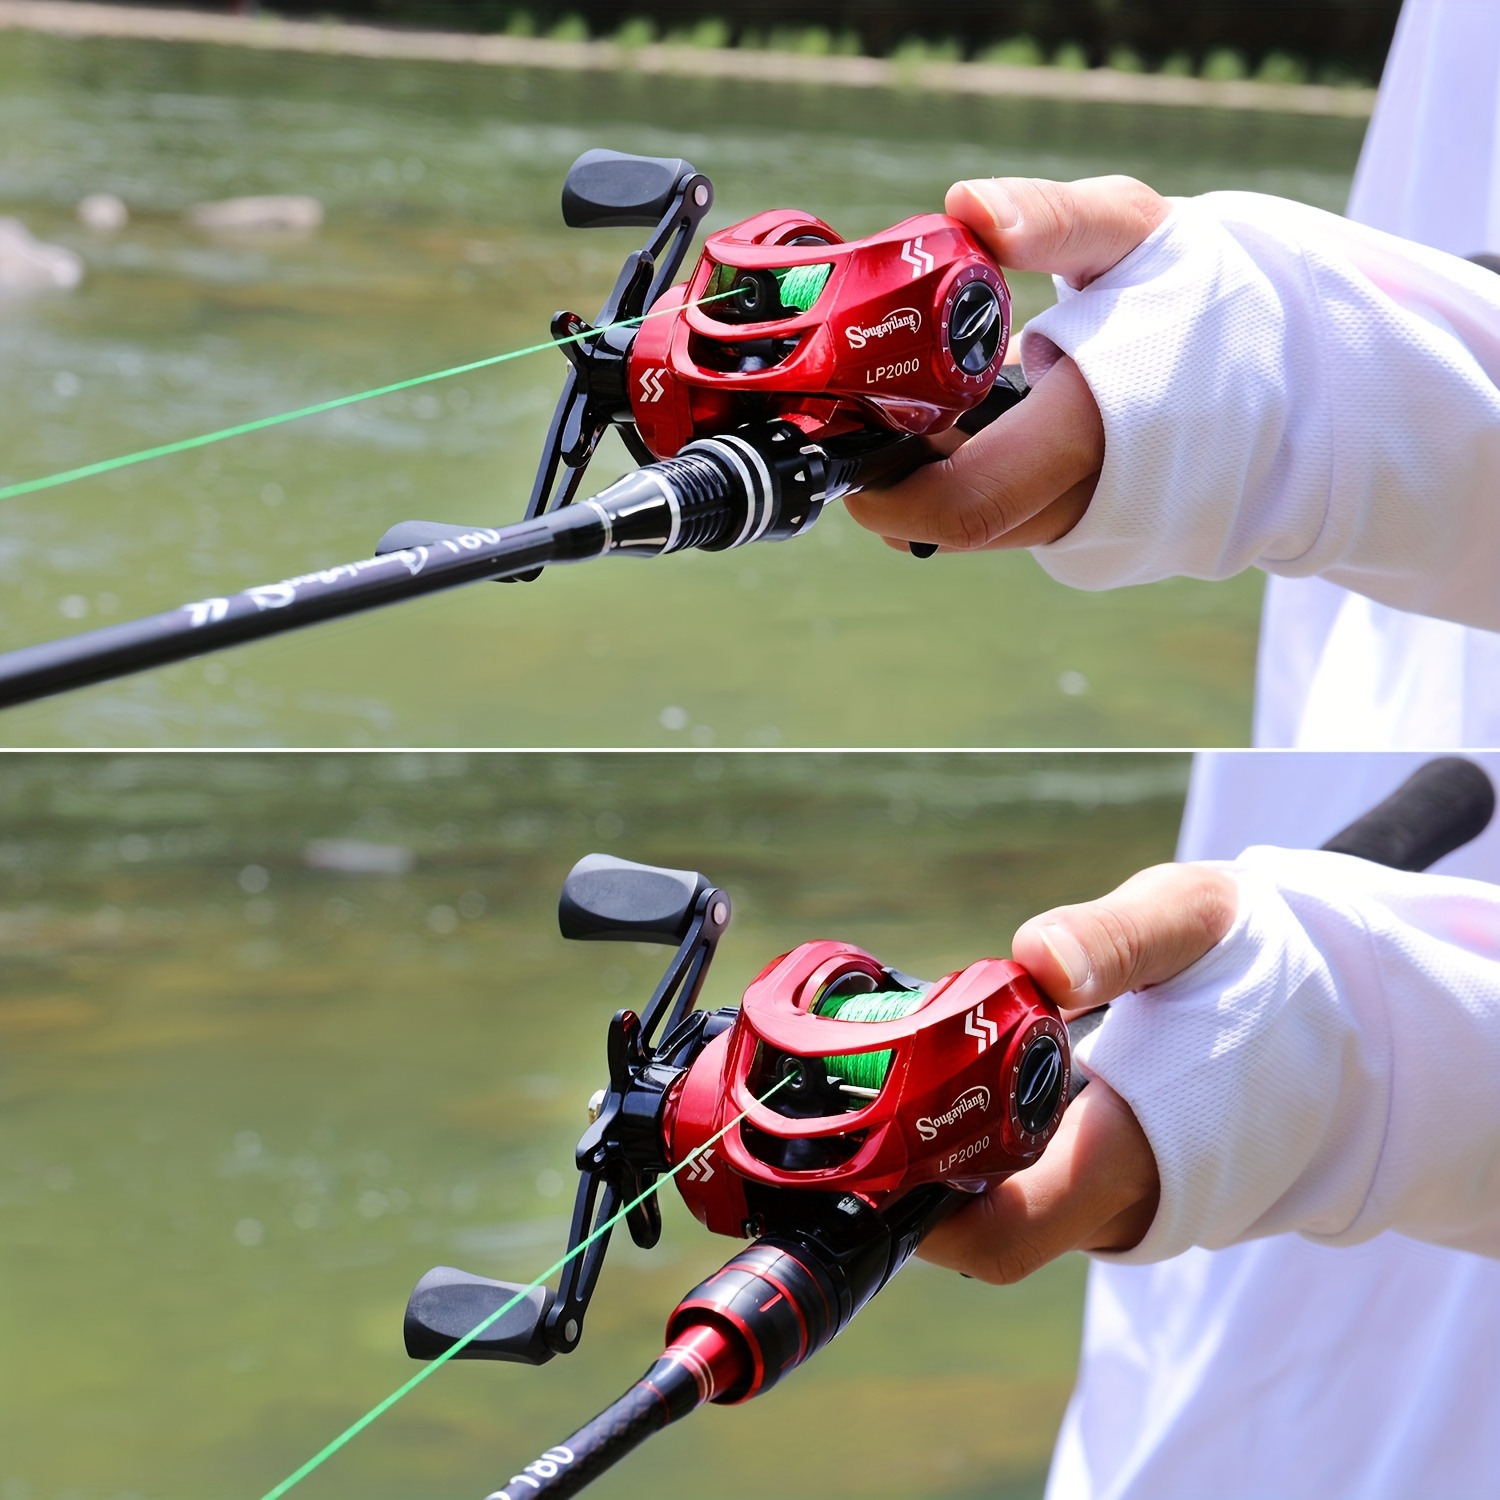 Sougayilang Fishing Rod and Reel Combo, Medium Fishing Pole with  Baitcasting Reel Combo, 2-Piece Fishing Combo Casting Rod with Left Handed  Reel 7' Medium